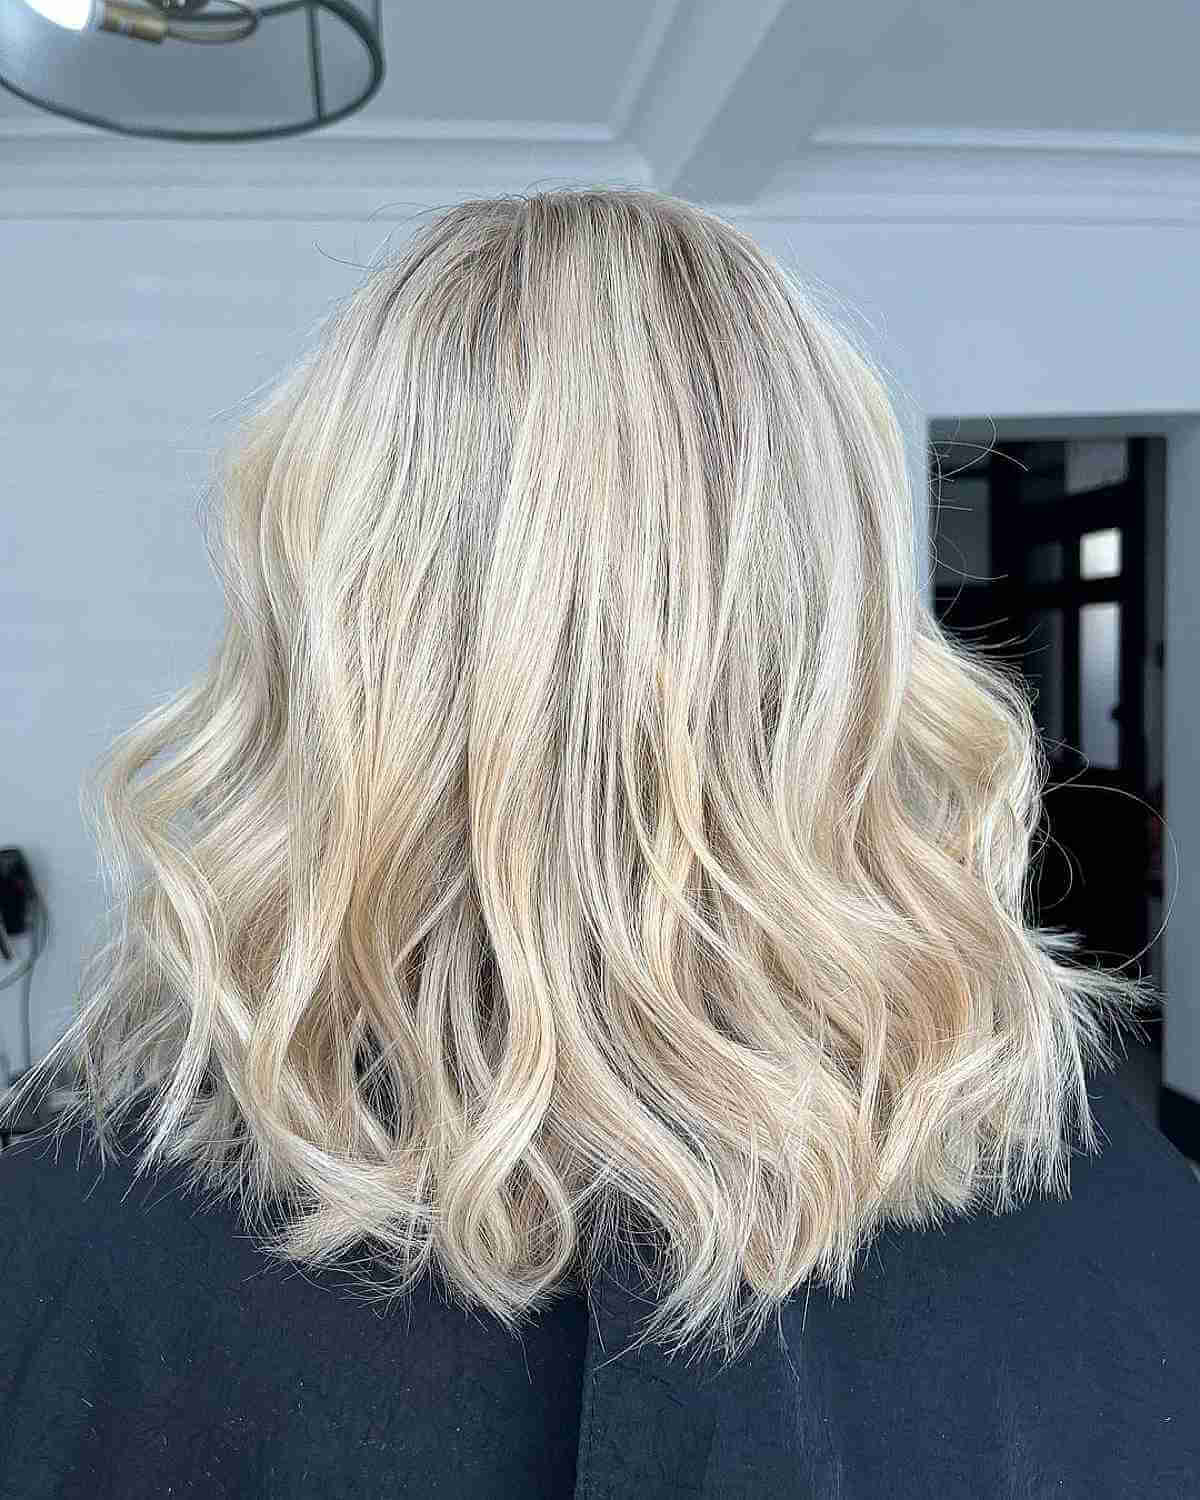 Creamy Blonde on Medium-Length Hair